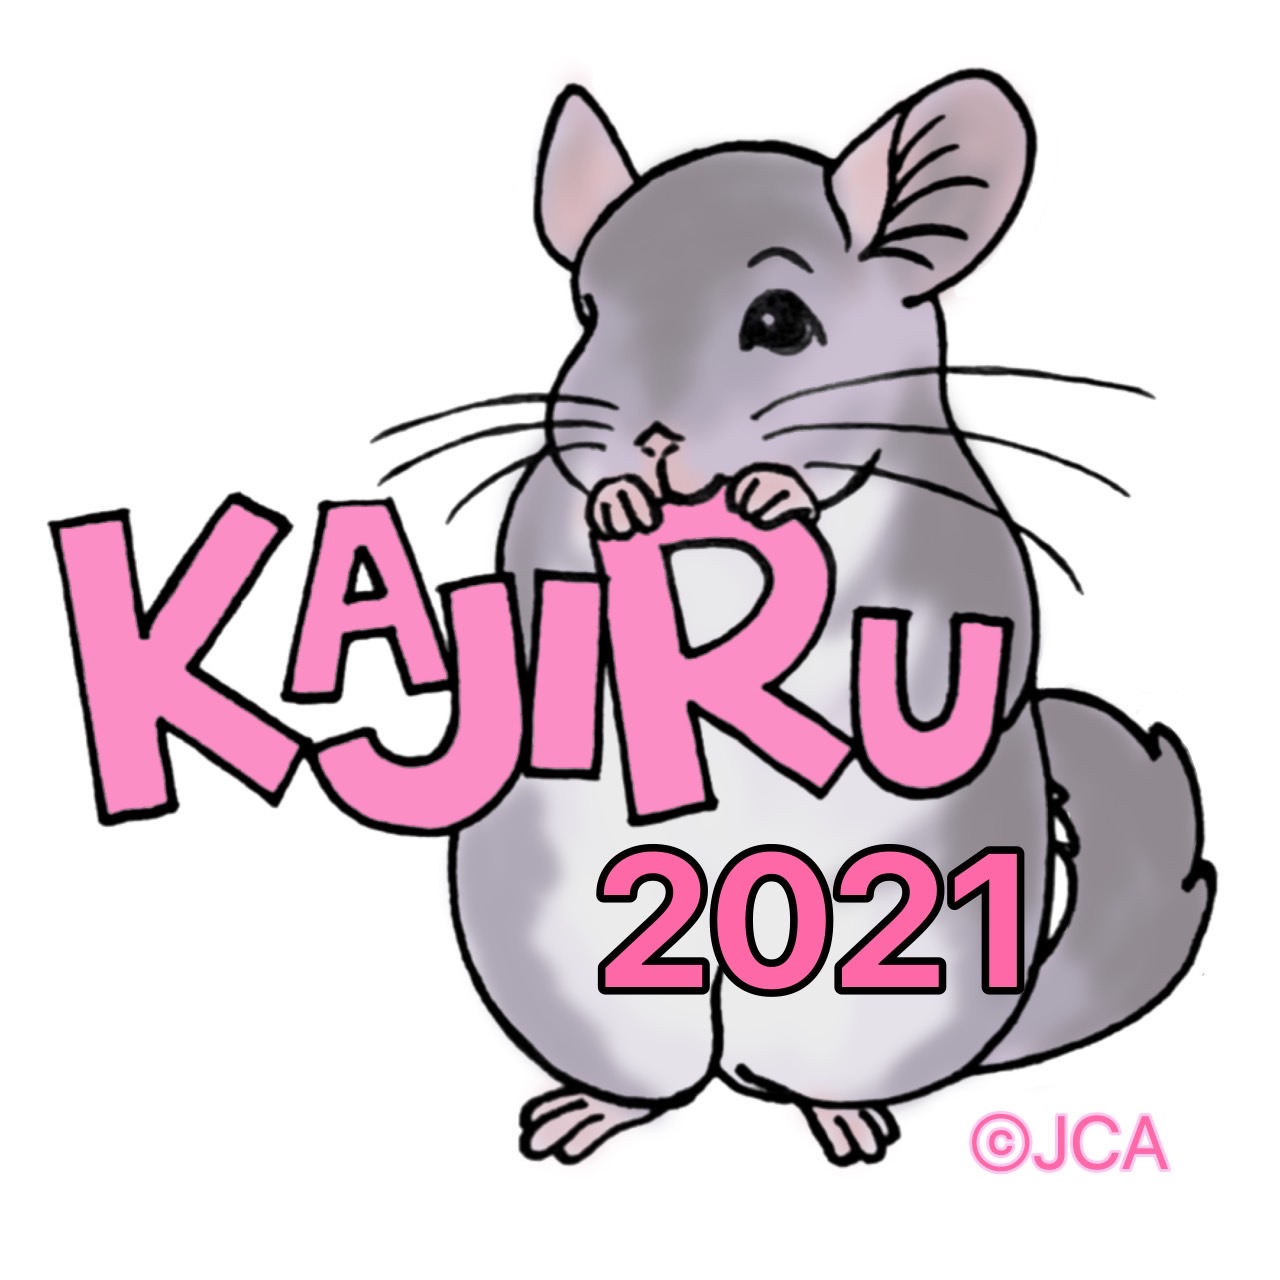 THE KAJIRU 2021